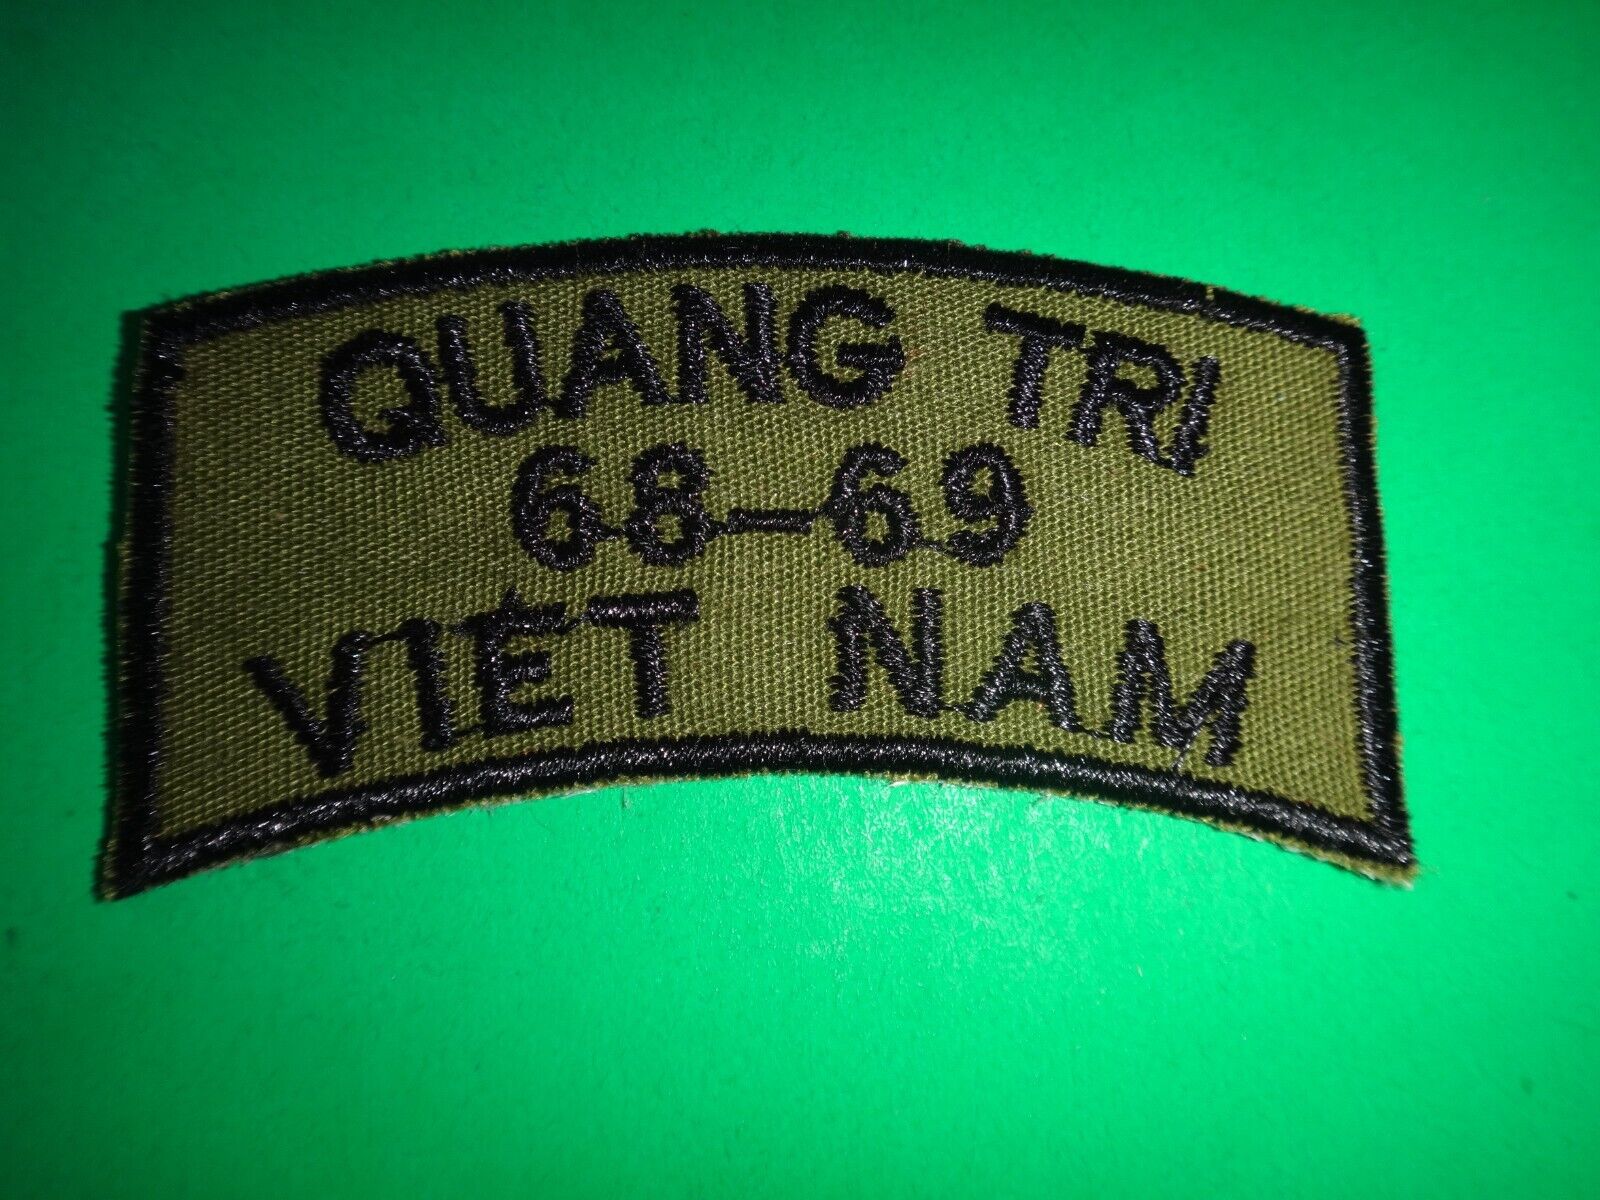 QUANG TRI 68-69 VIETNAM Subdued Patch From Vietnam War Era